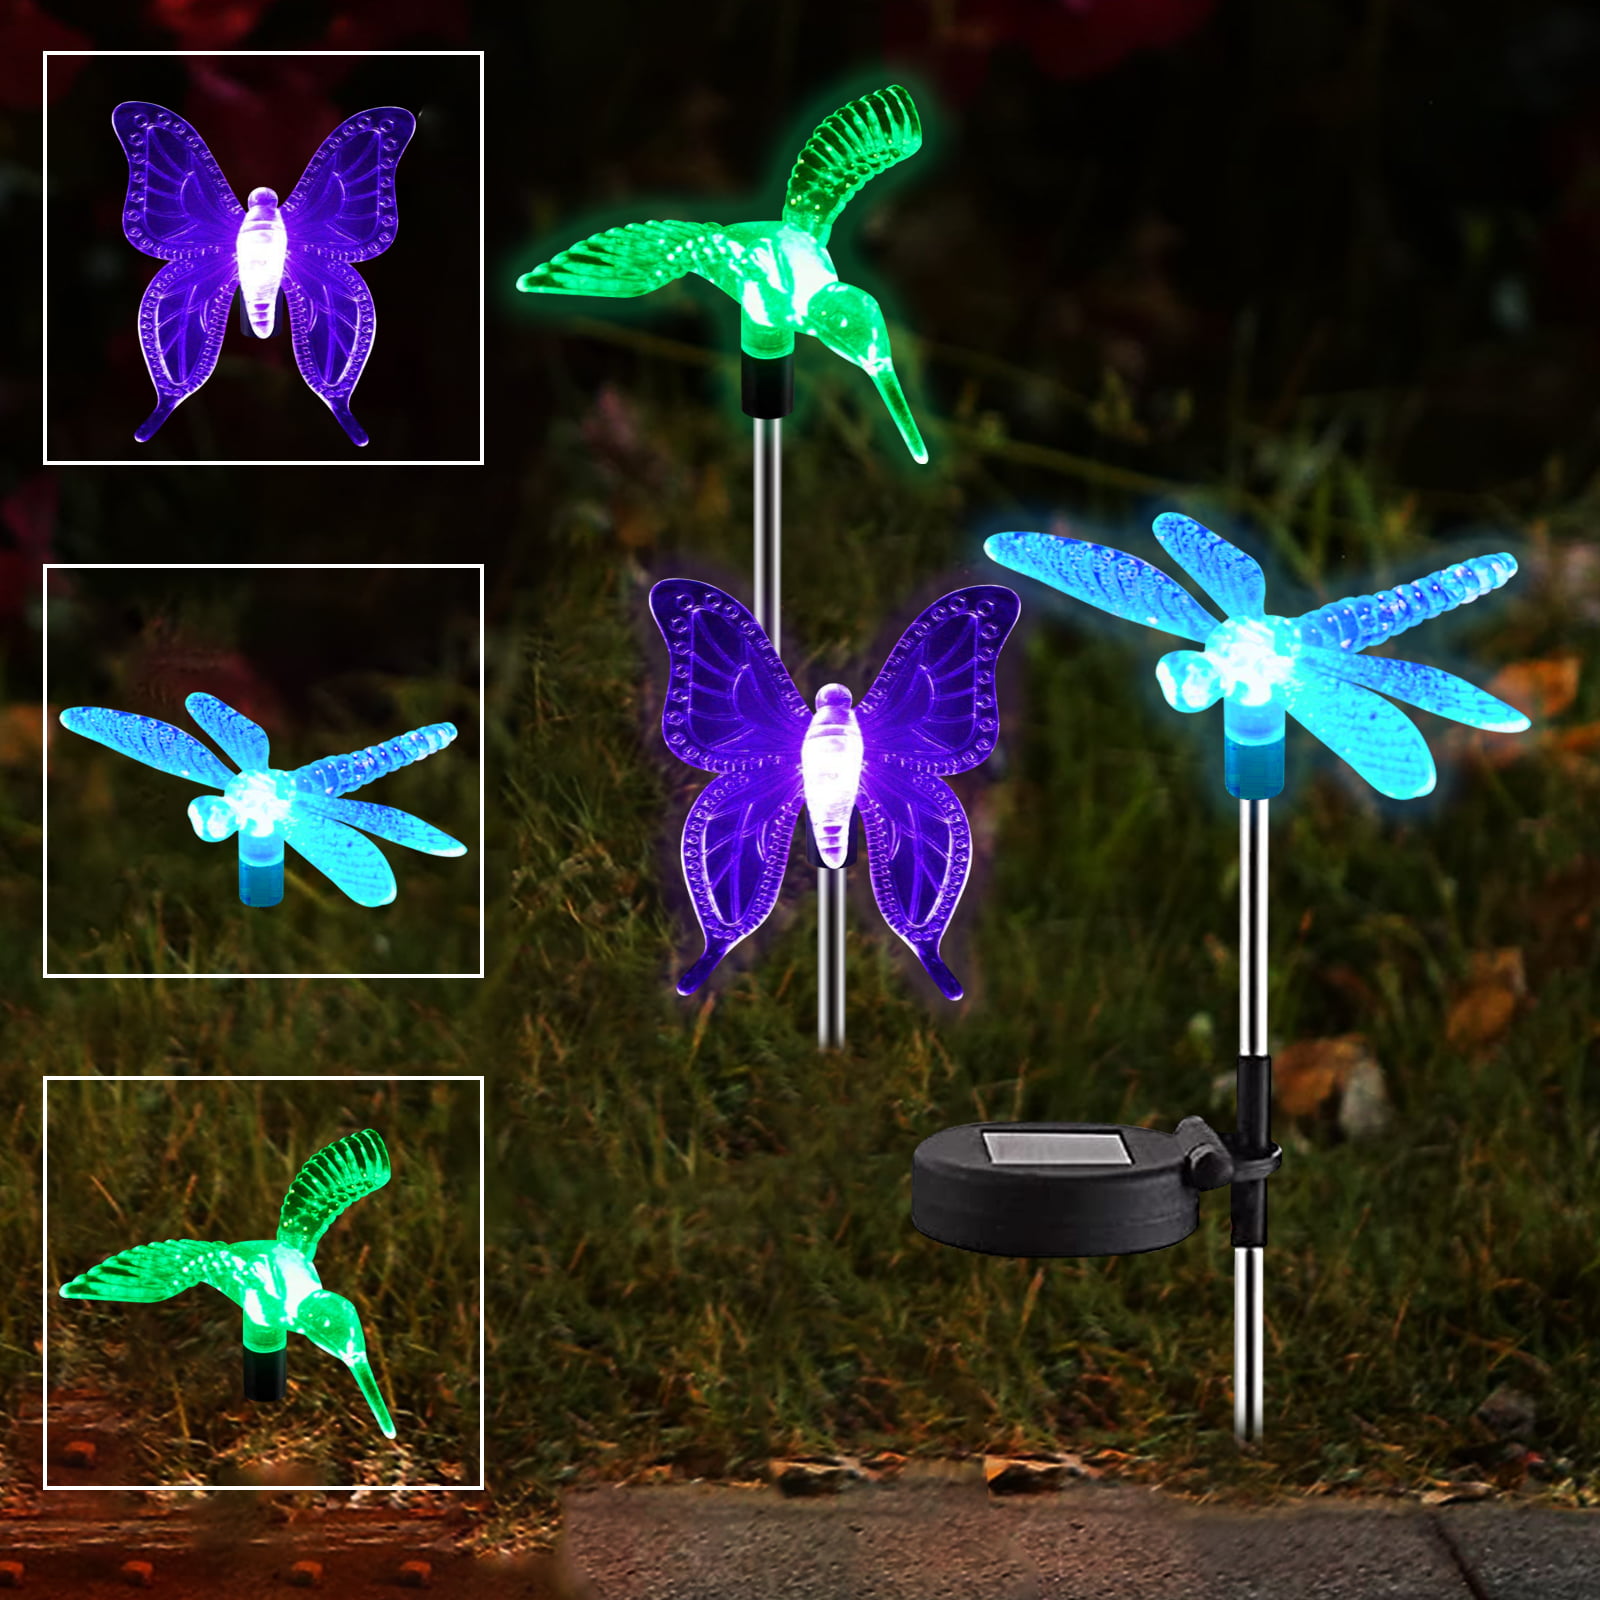 Details about   Hanging Solar Garden Lights Butterfly Lantern Outdoor Stake Landscape Decor US 